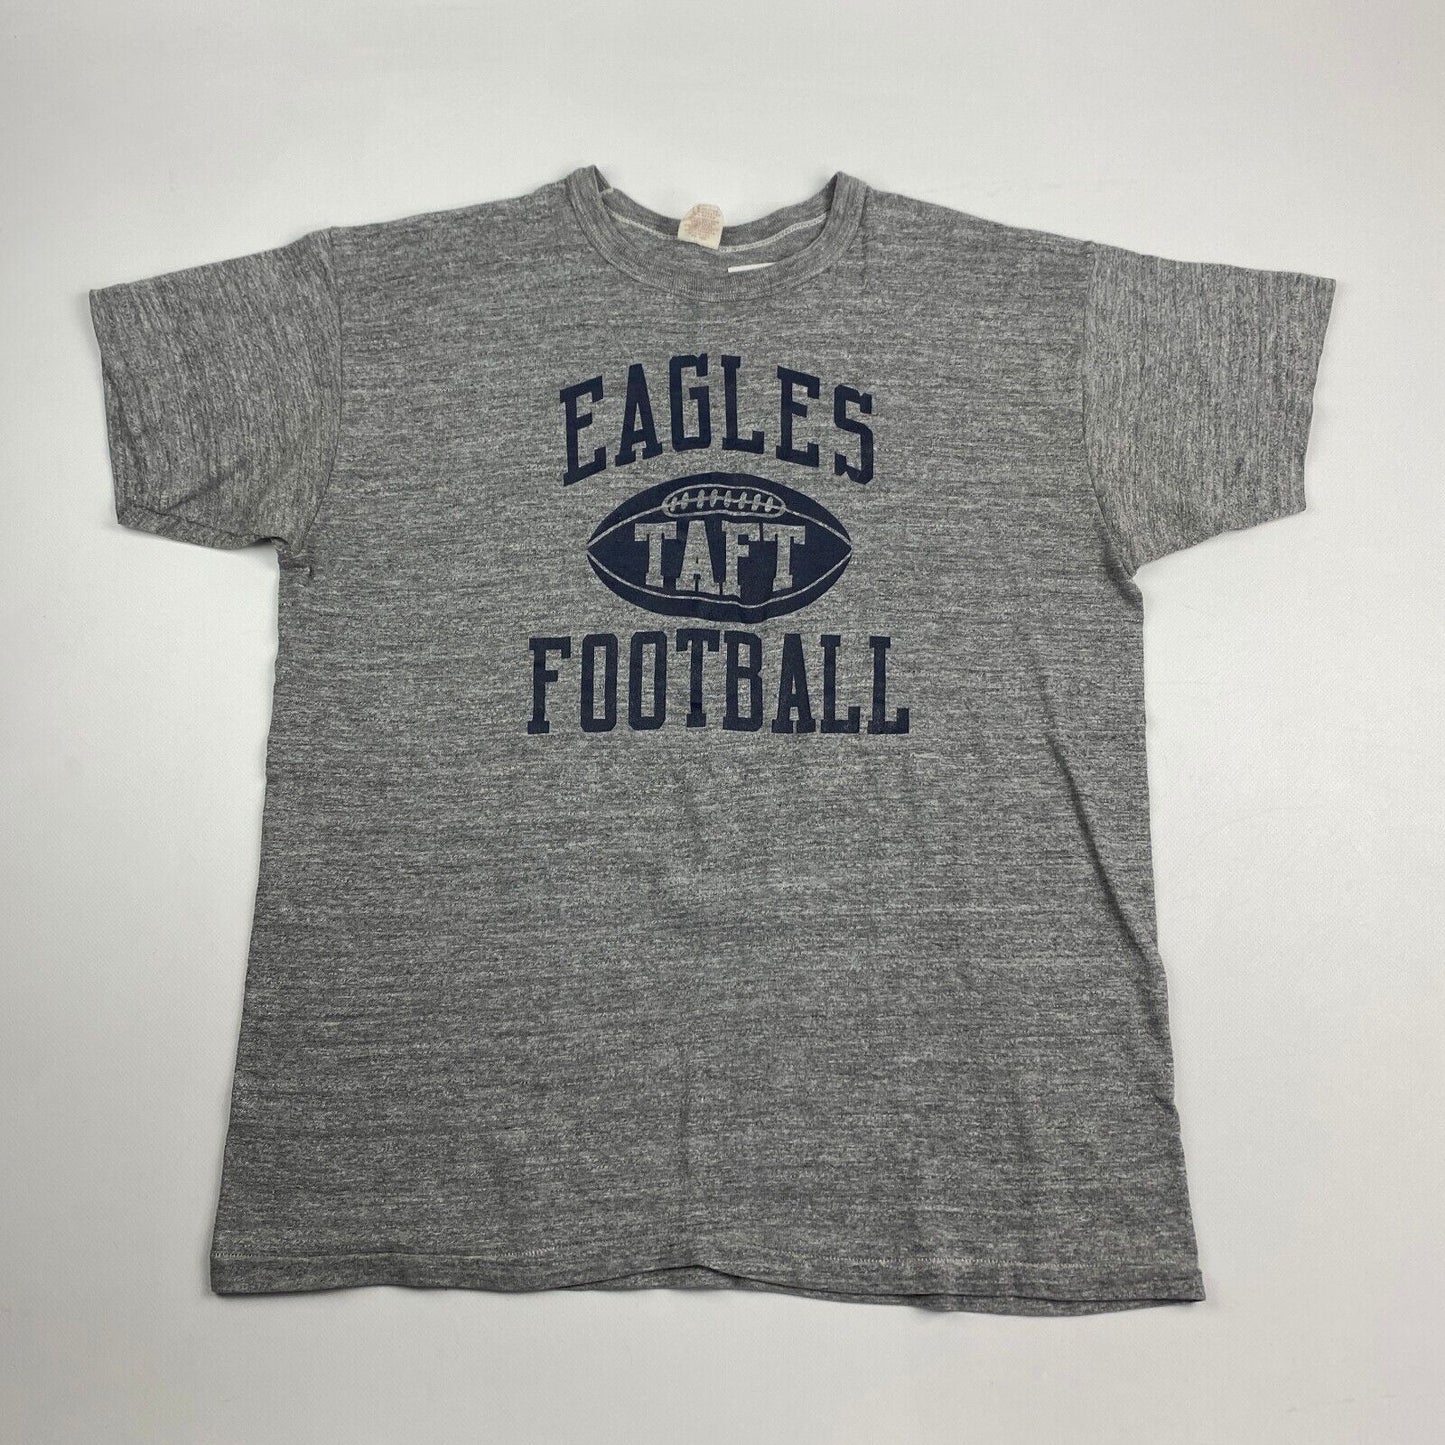 VINTAGE 70s Eagles Taft Football Russell Athletic T-Shirt sz Large Men